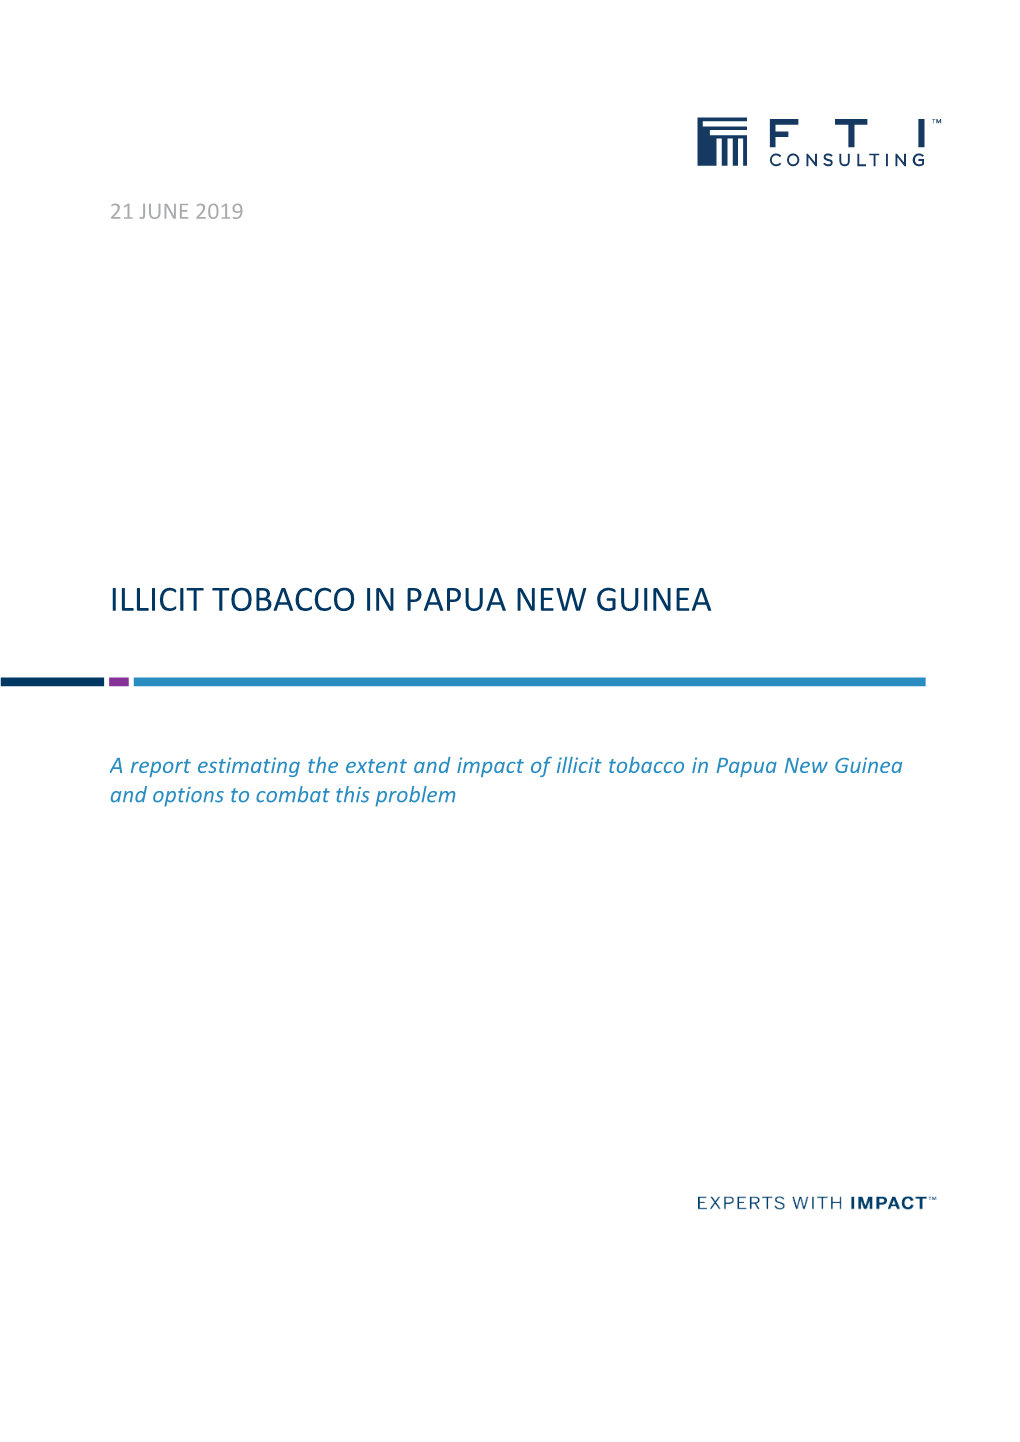 Illicit Tobacco in Papua New Guinea